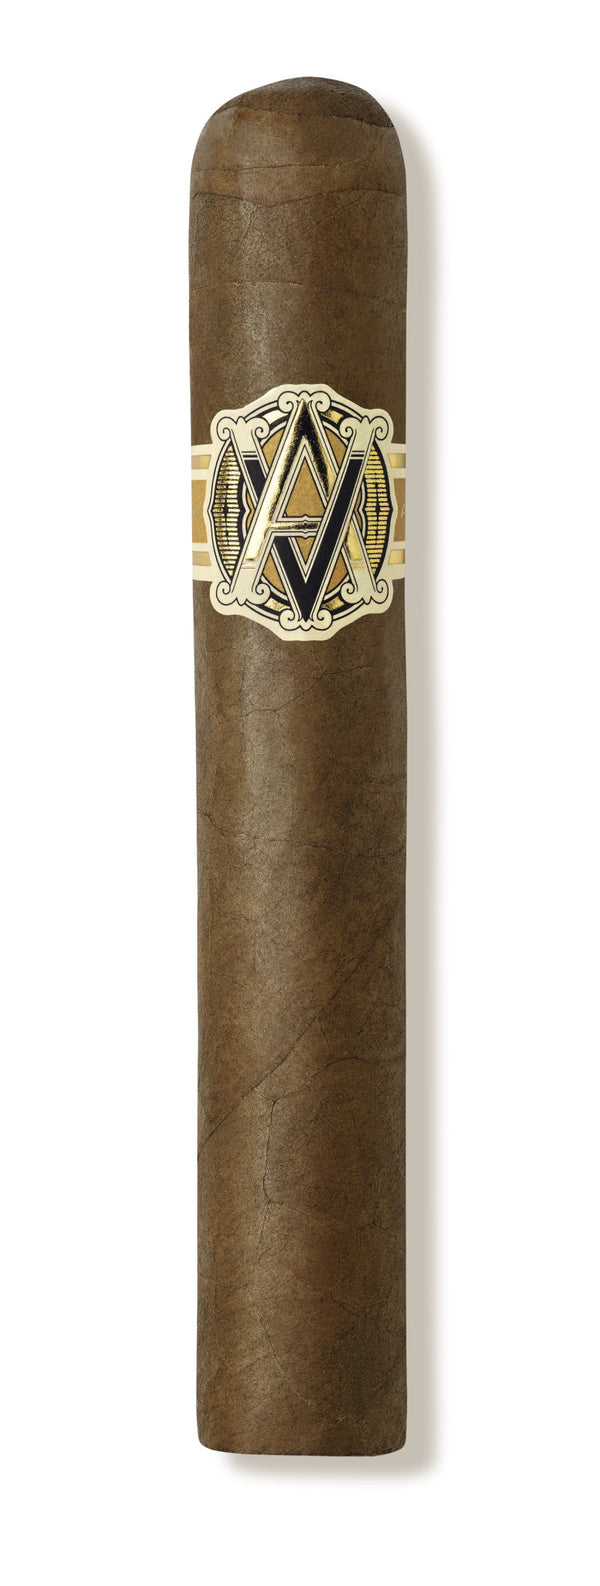 Avo Cigars Classic Maduro Robusto